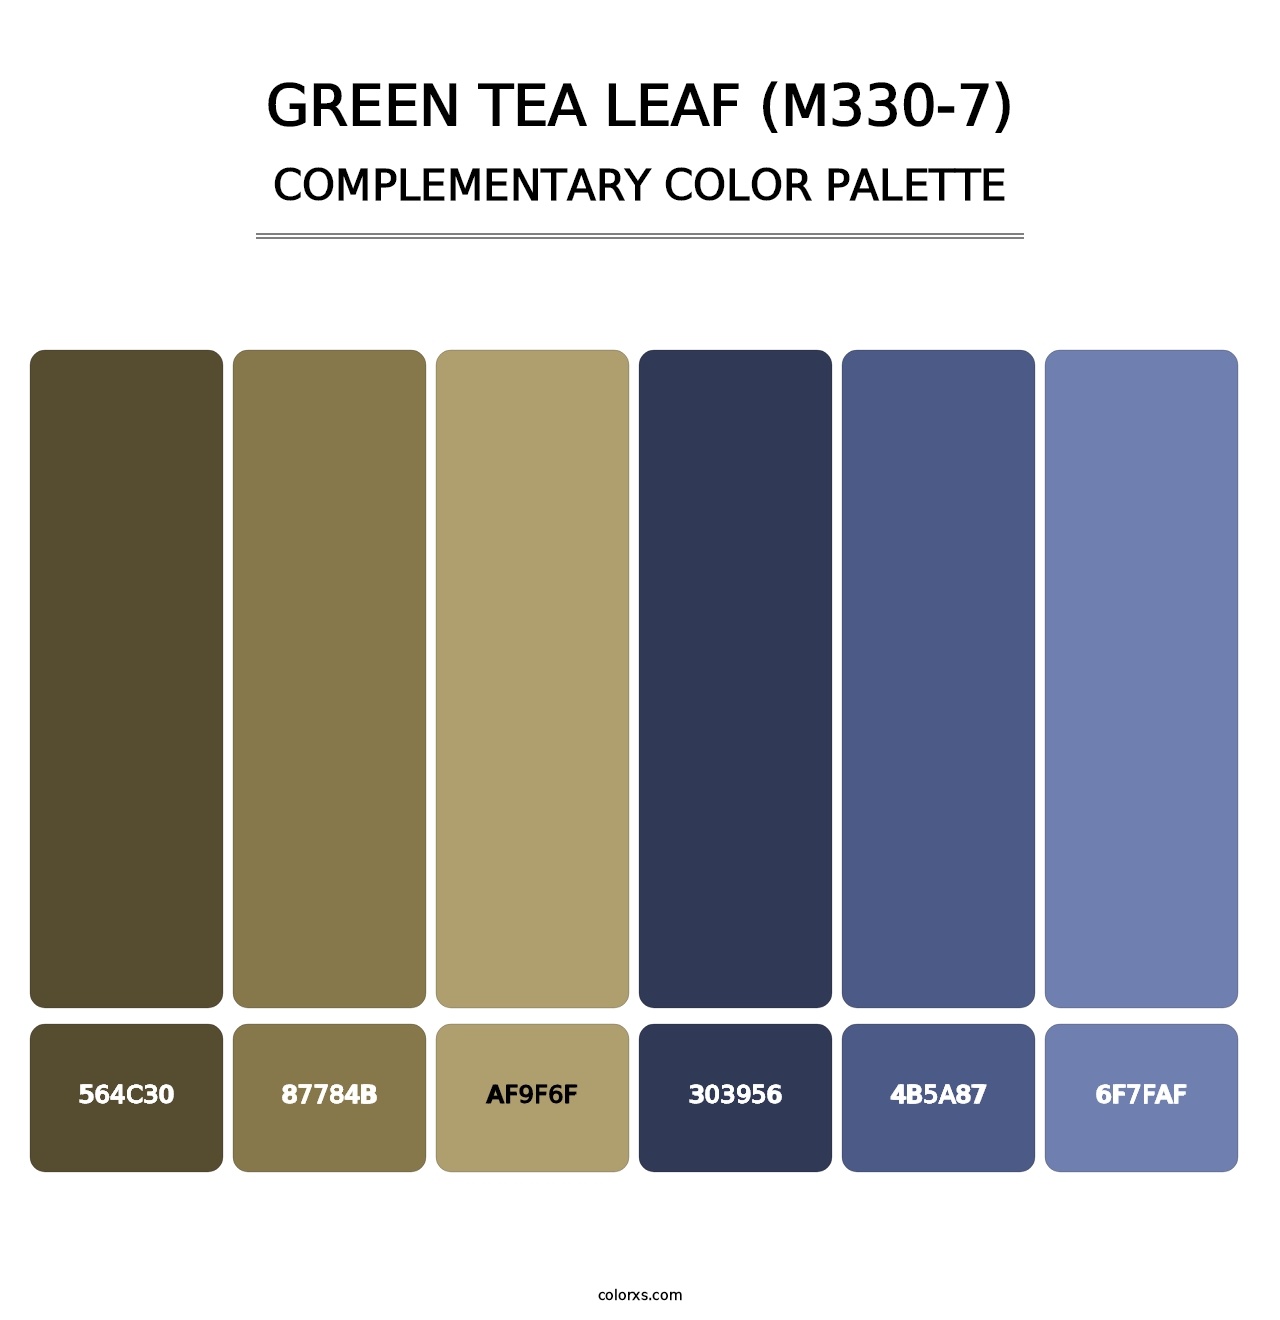 Green Tea Leaf (M330-7) - Complementary Color Palette